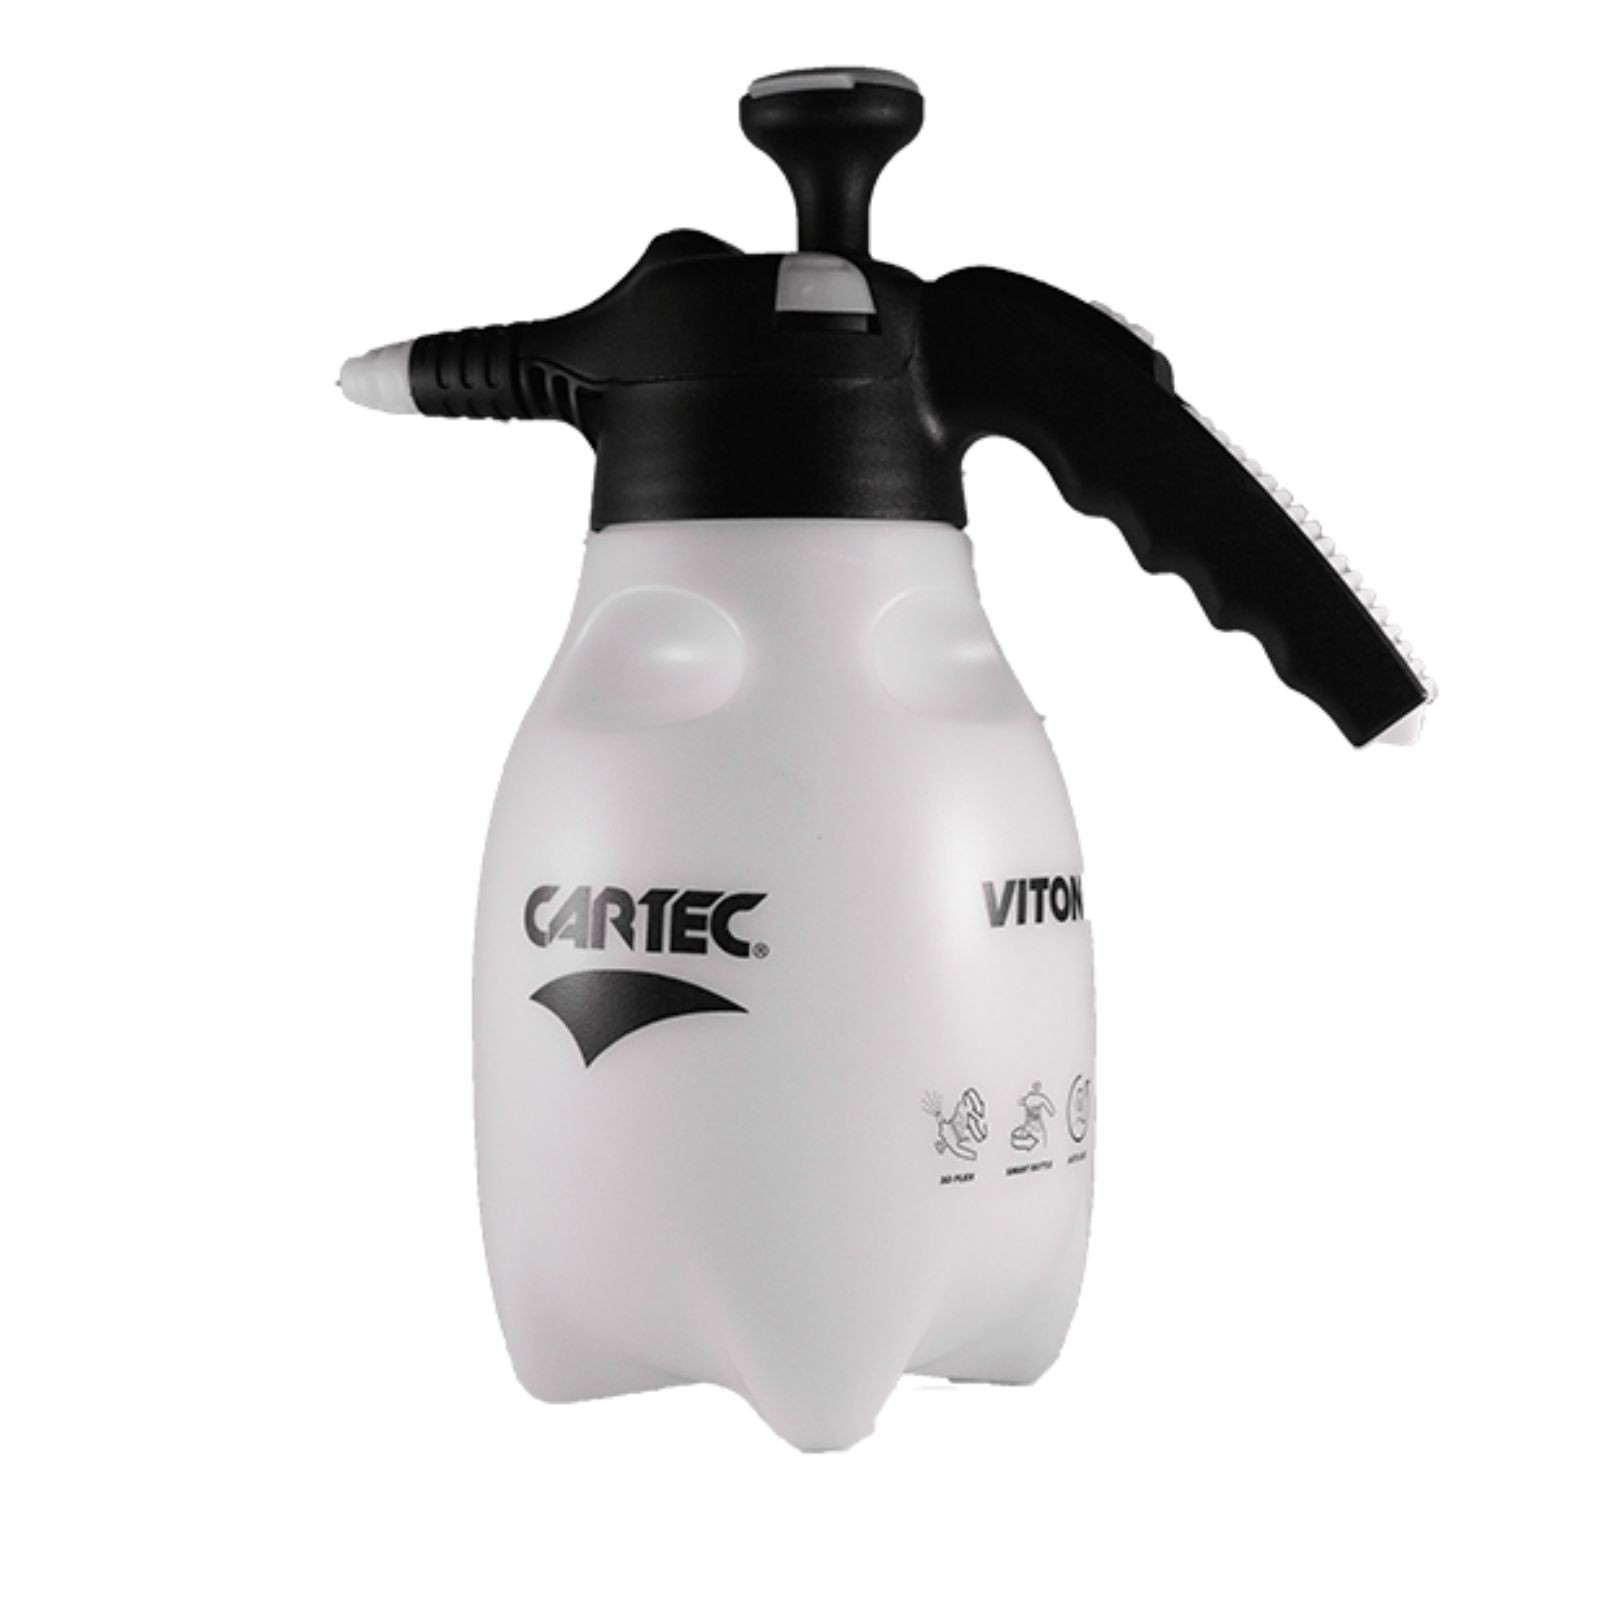 Drukpomp Cartec 2 liter VITON (Zuur/Oplosmiddel)